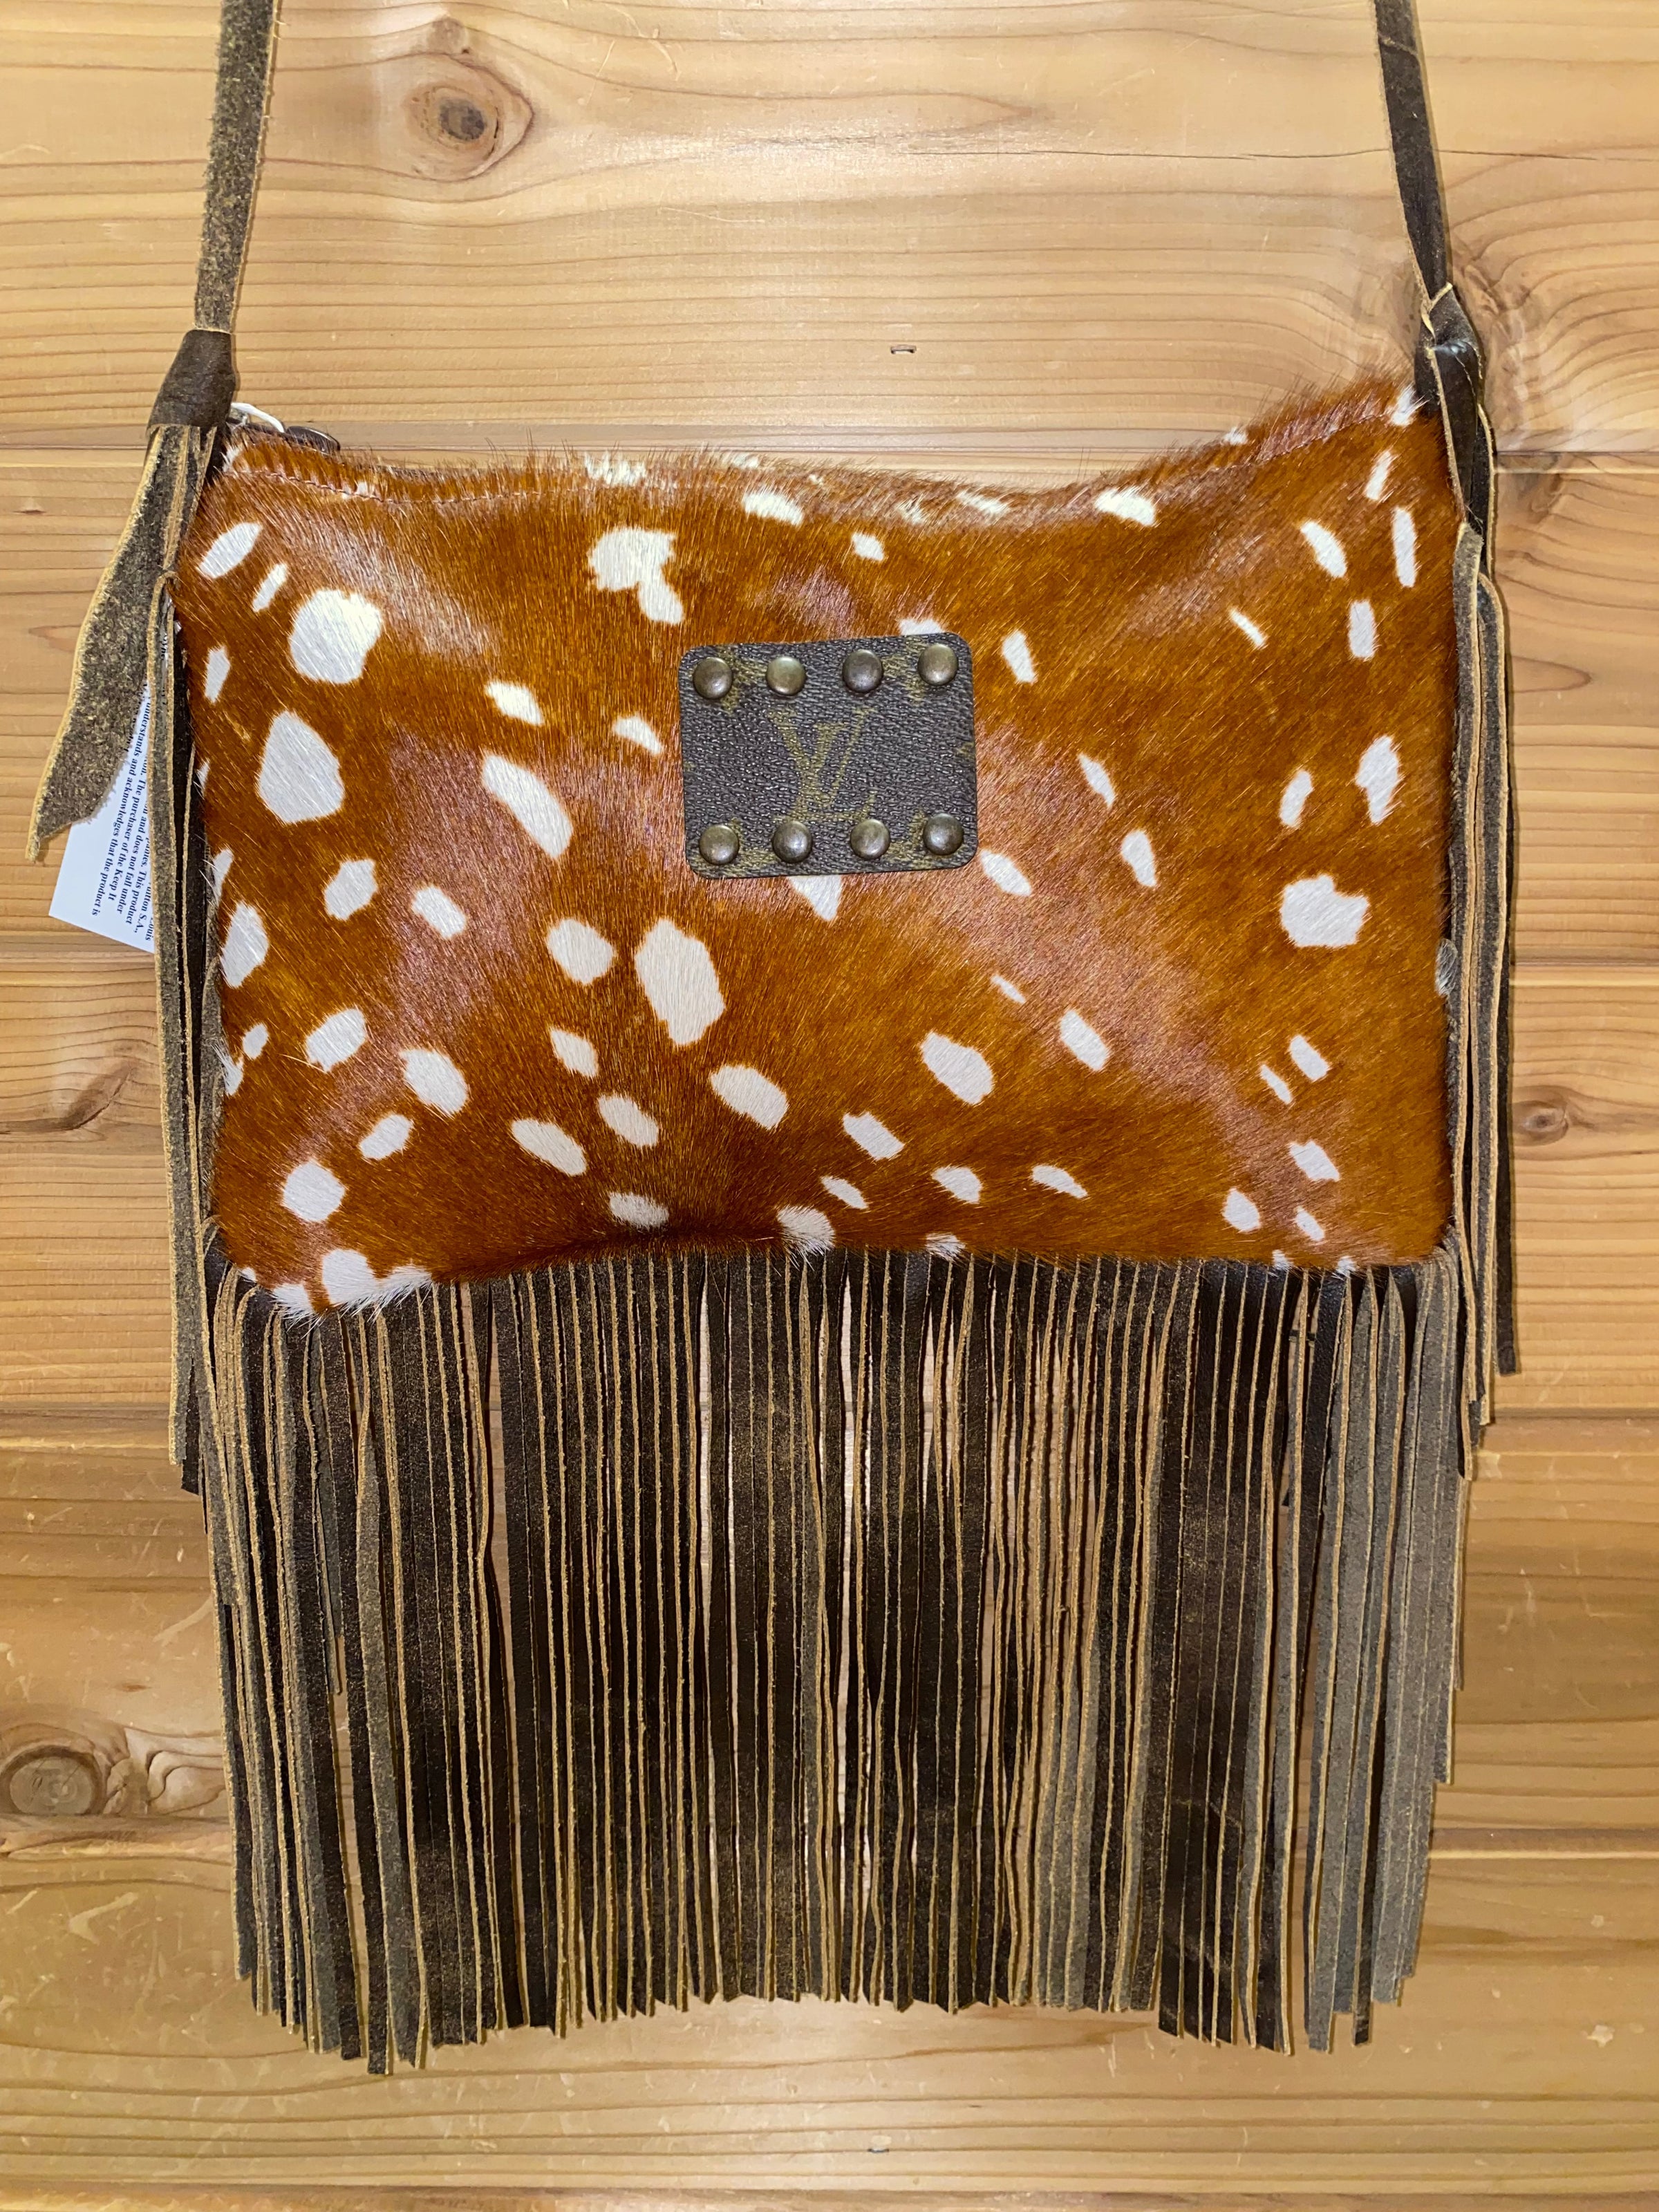 Leopard Fringe LV Purse  Bags, Purses and handbags, Western bag